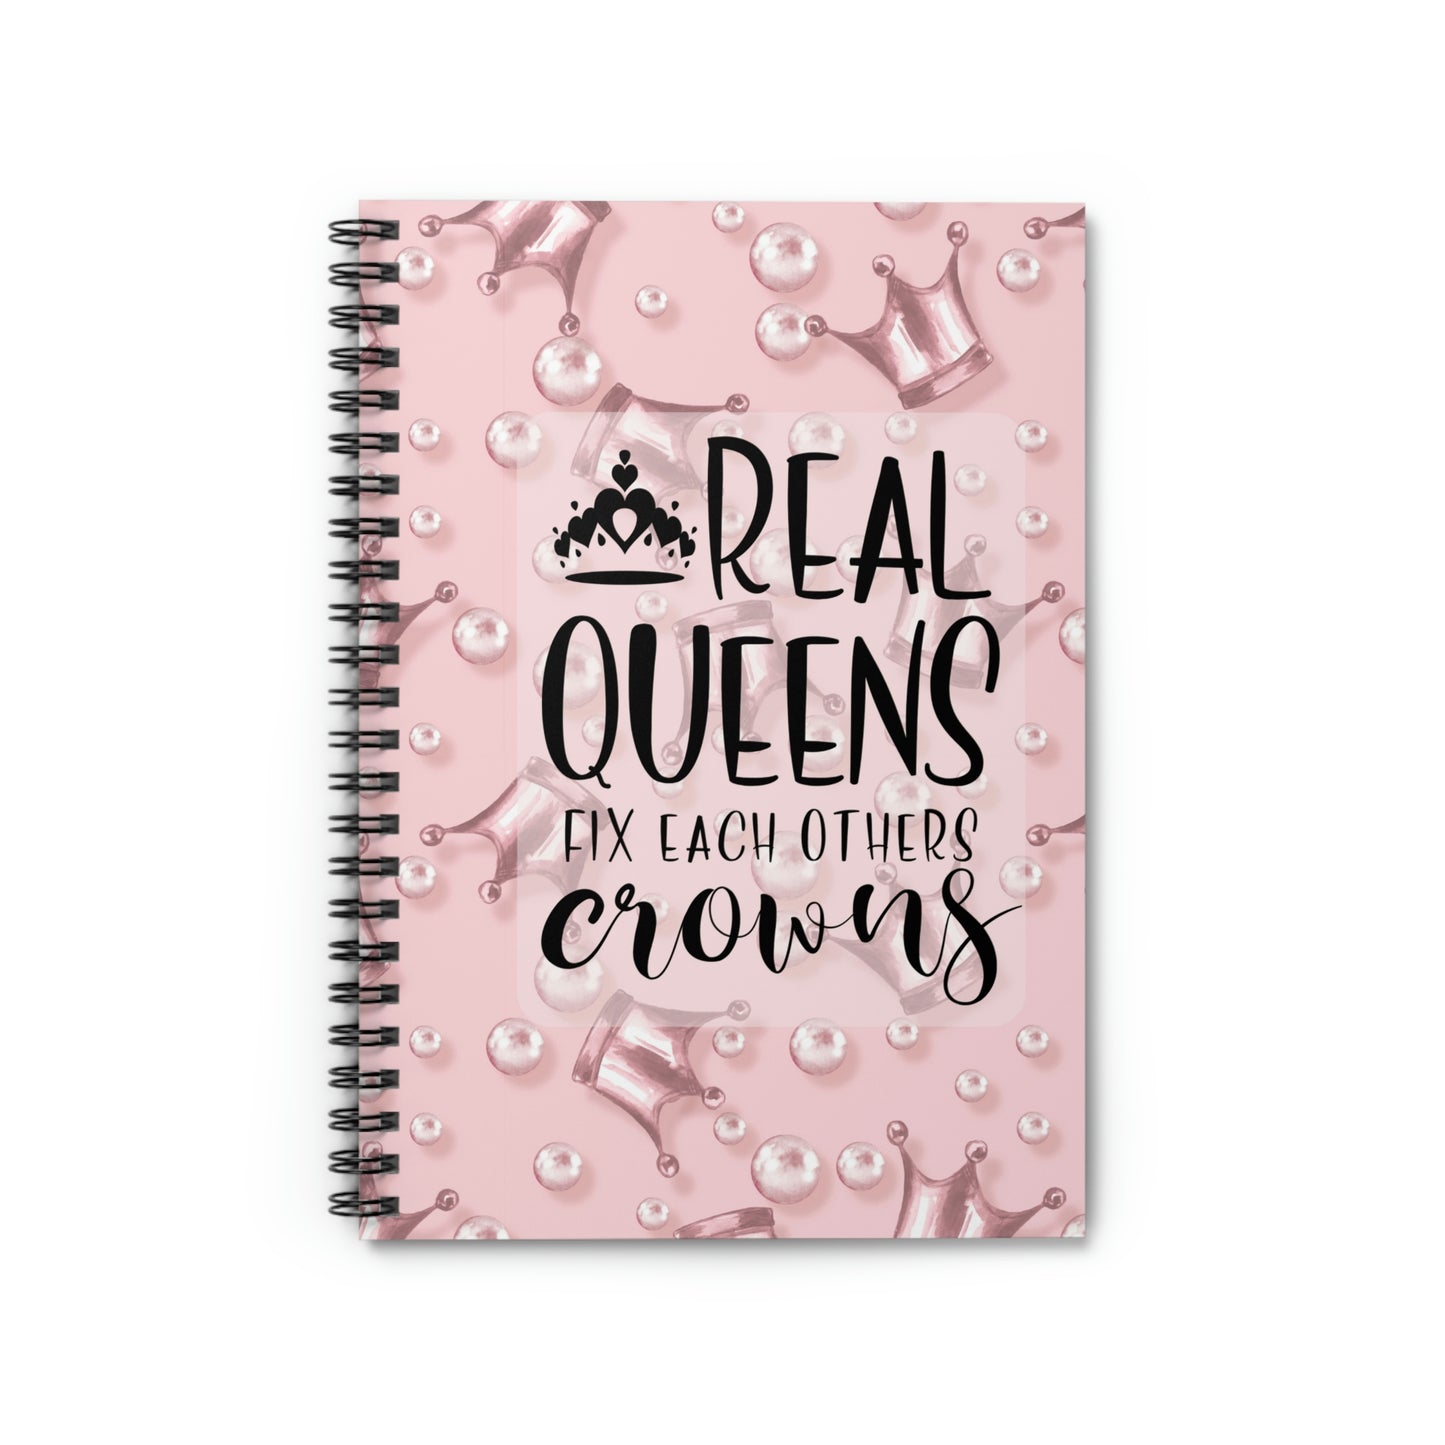 Real Queens - Spiral Notebook